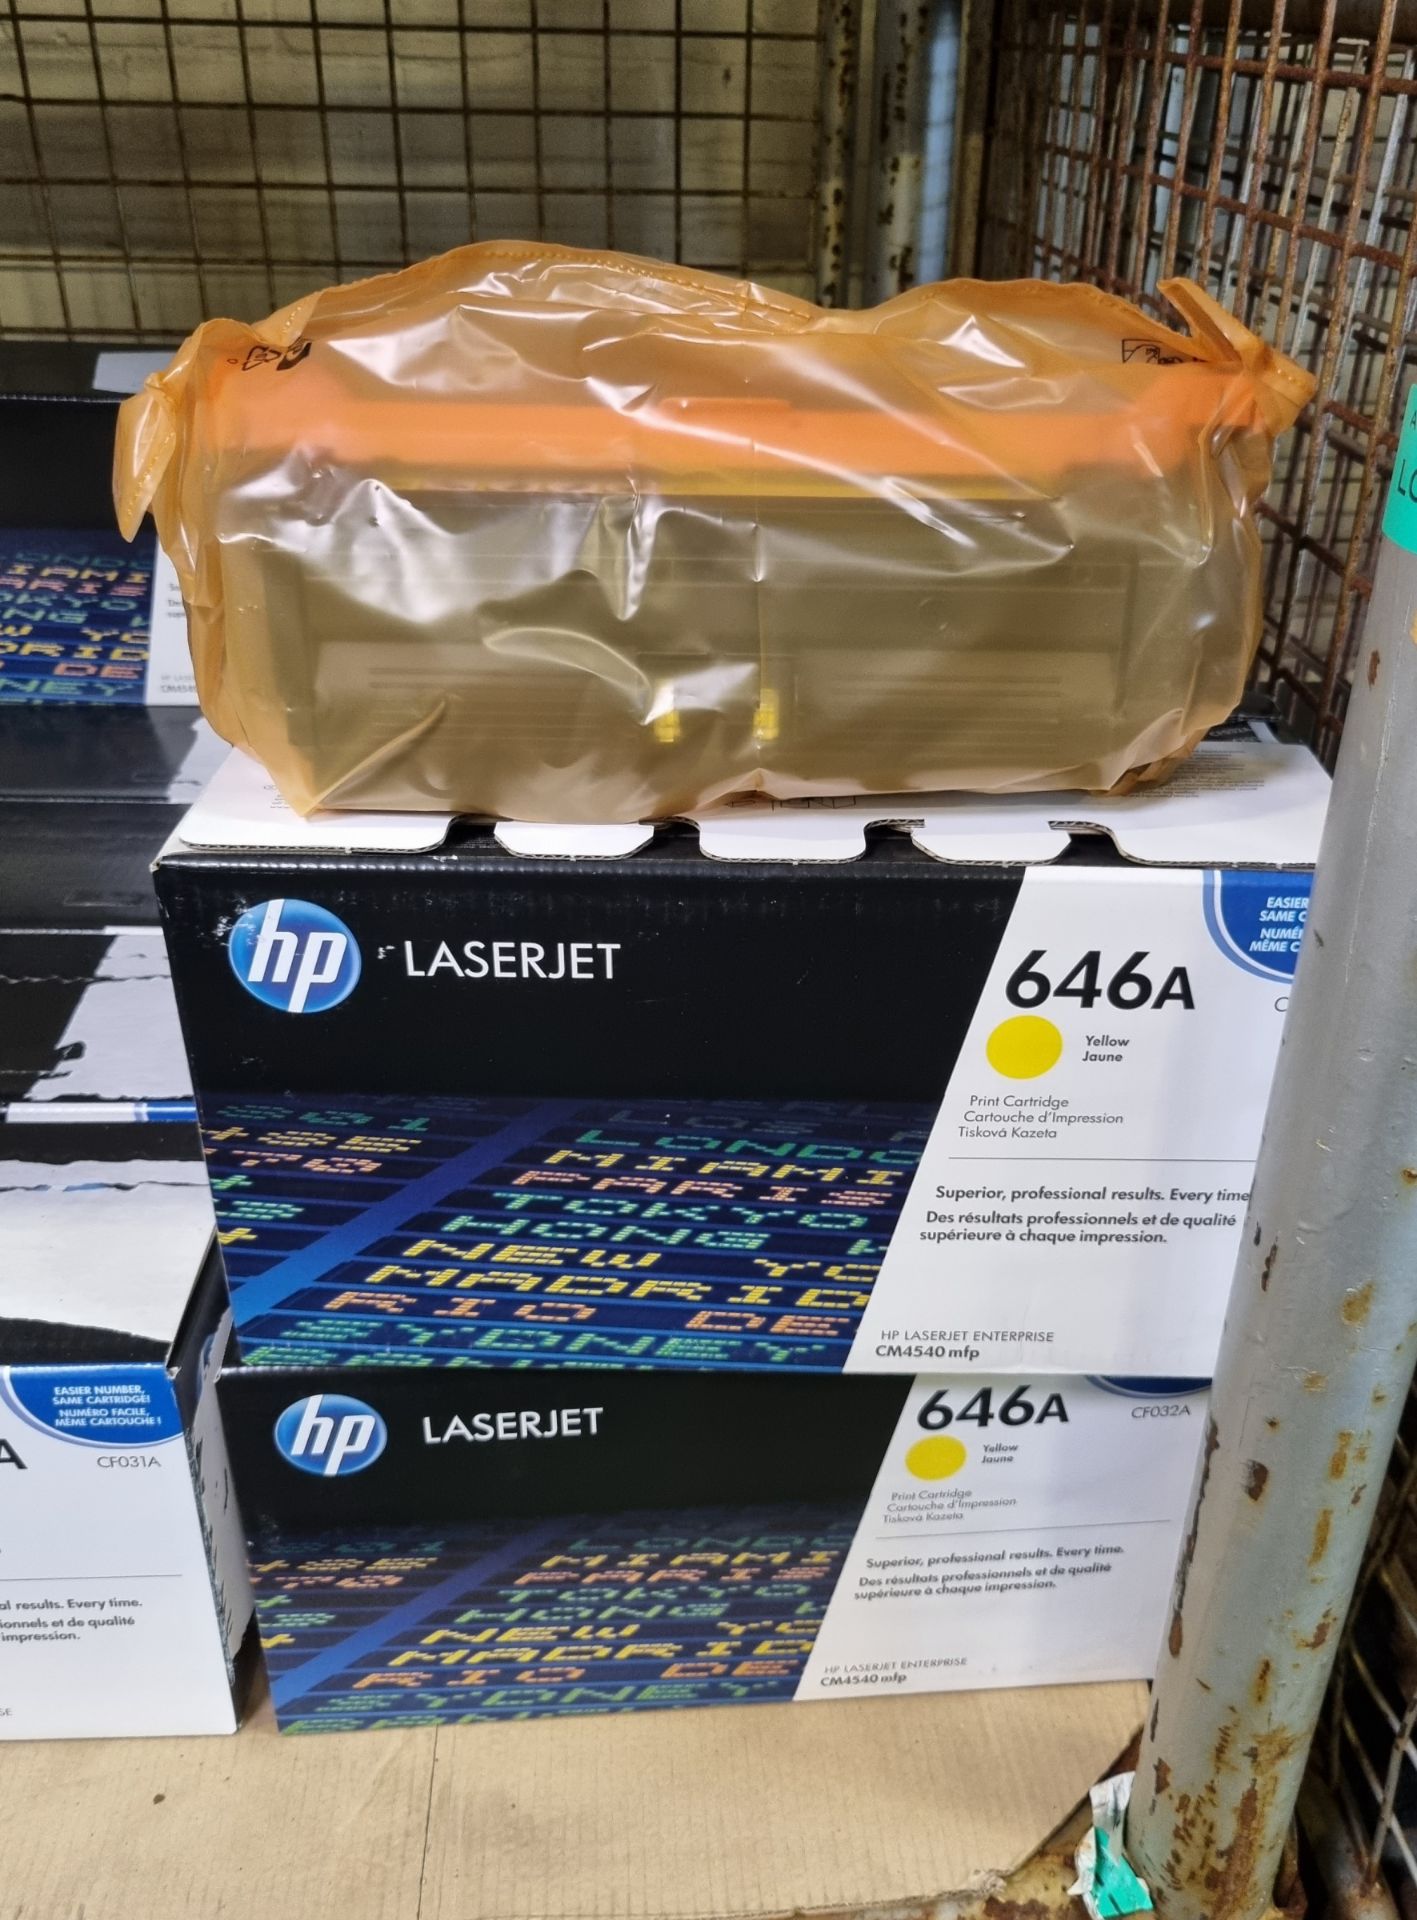 Multiple HP Laserjet print cartridges - x24 units total - Image 2 of 4